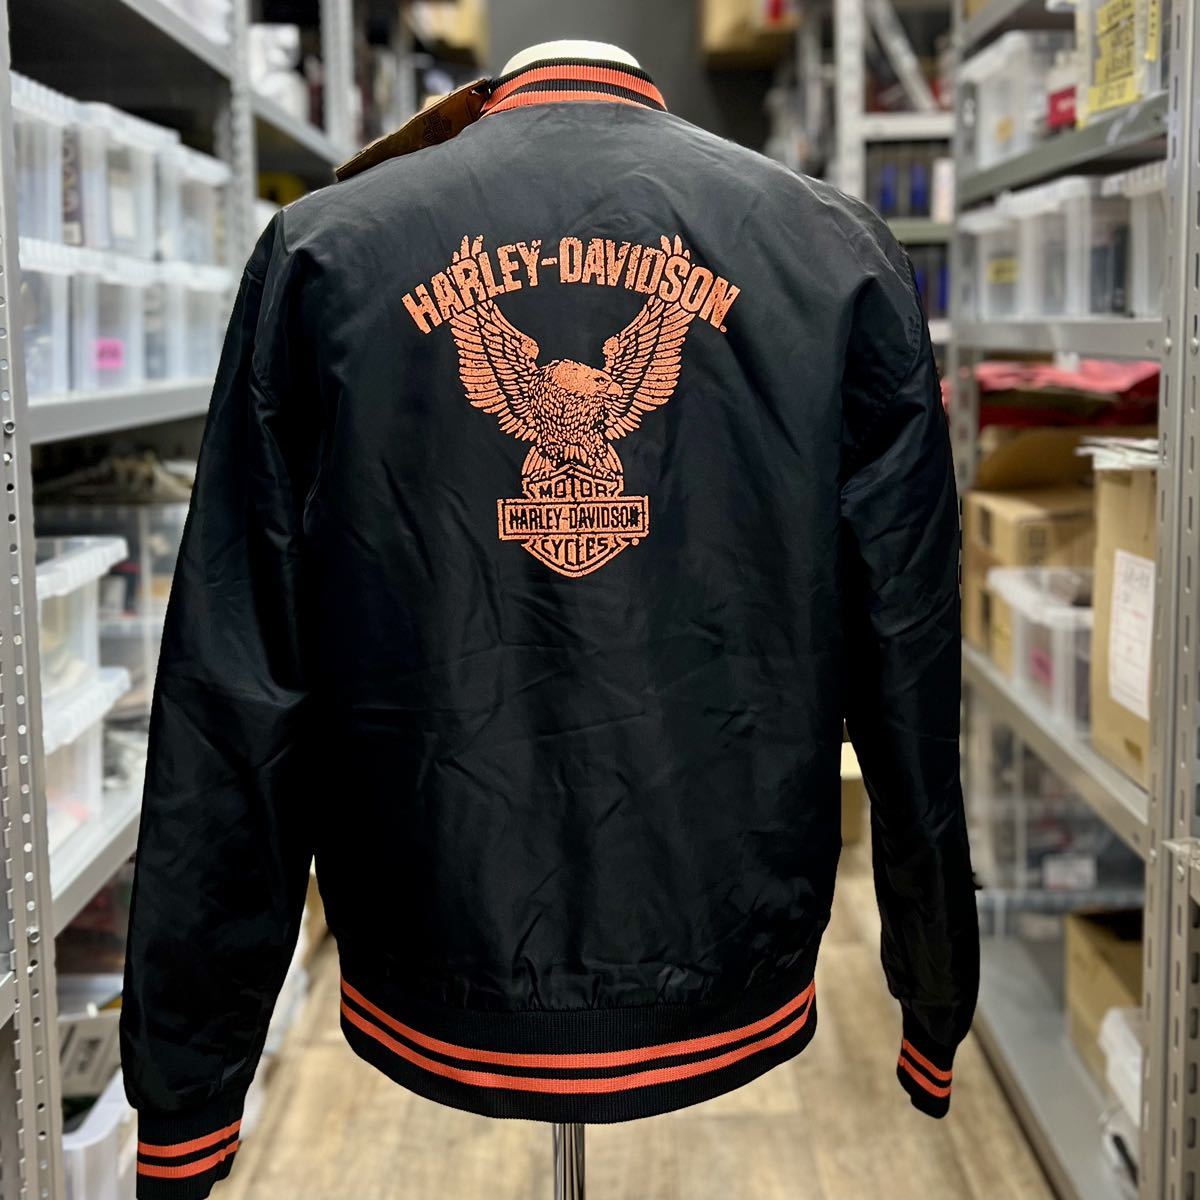 exhibition goods Harley Davidson Bomber jacket dist less do Eagle